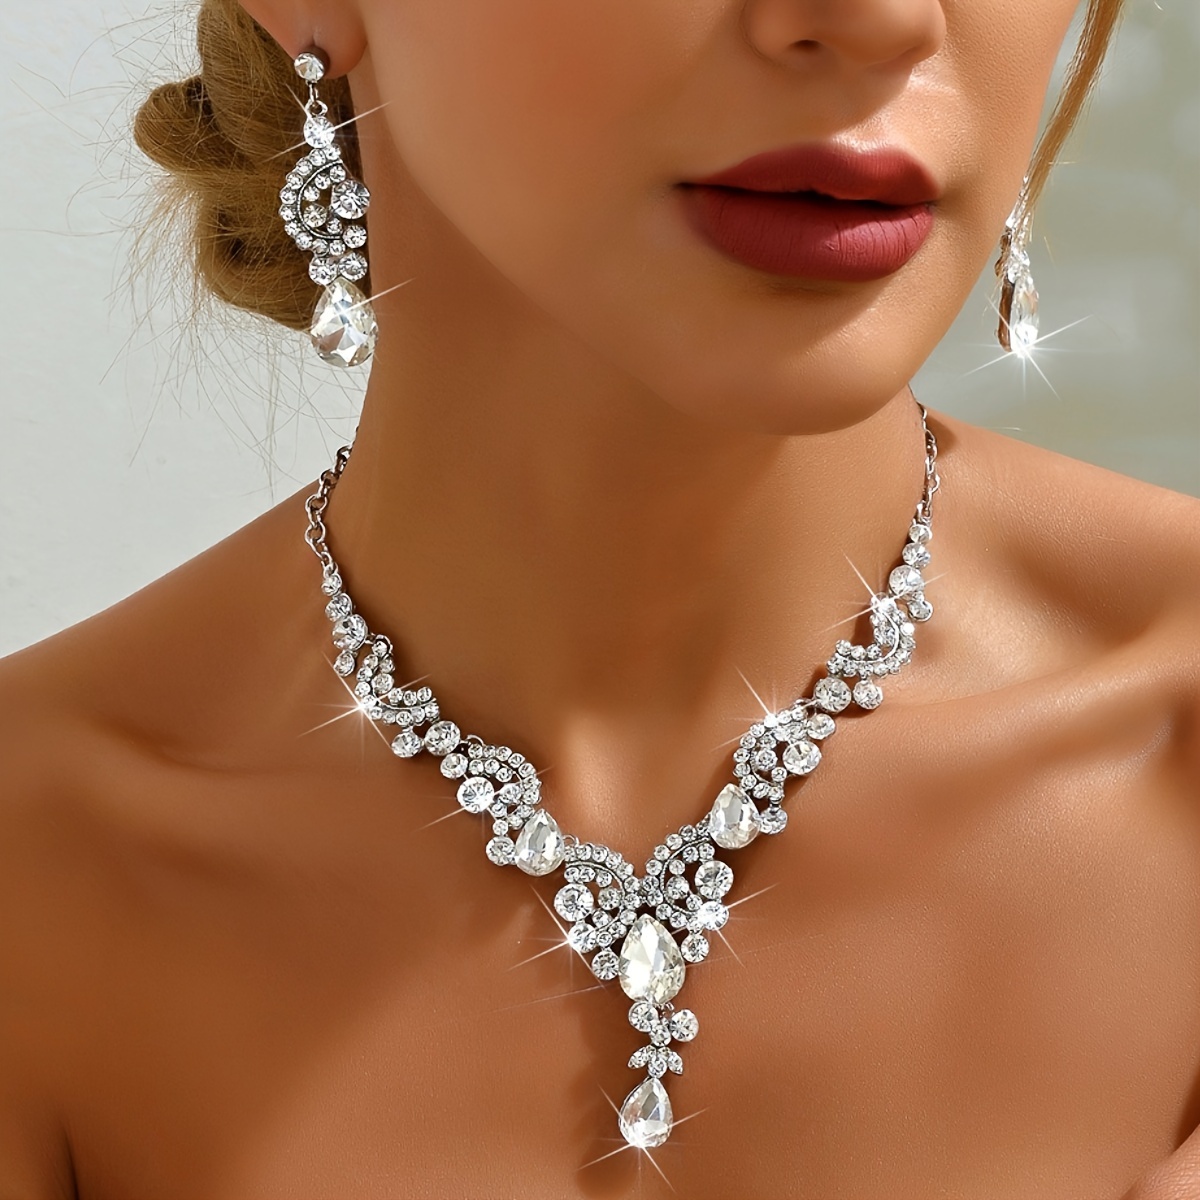 

Crystal Rhinestone Bridal Jewelry Set, Vintage Style Necklace And Earrings, Sparkling Wedding Accessories, Women's Glamorous Dress Up Fashion, Elegant Diamond-look Gift Set